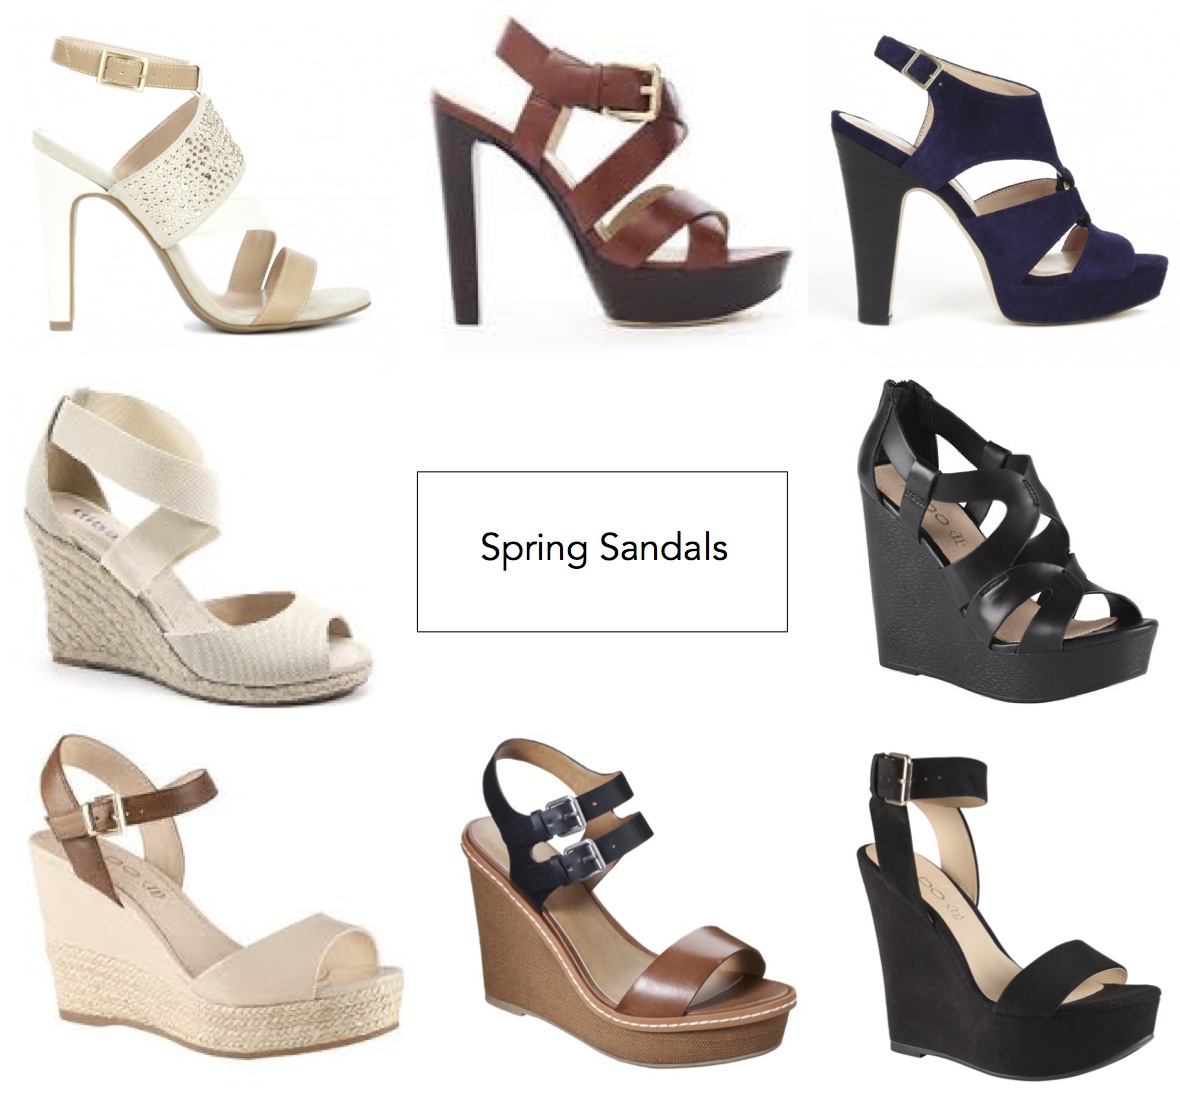 Spring Sandals: My Picks